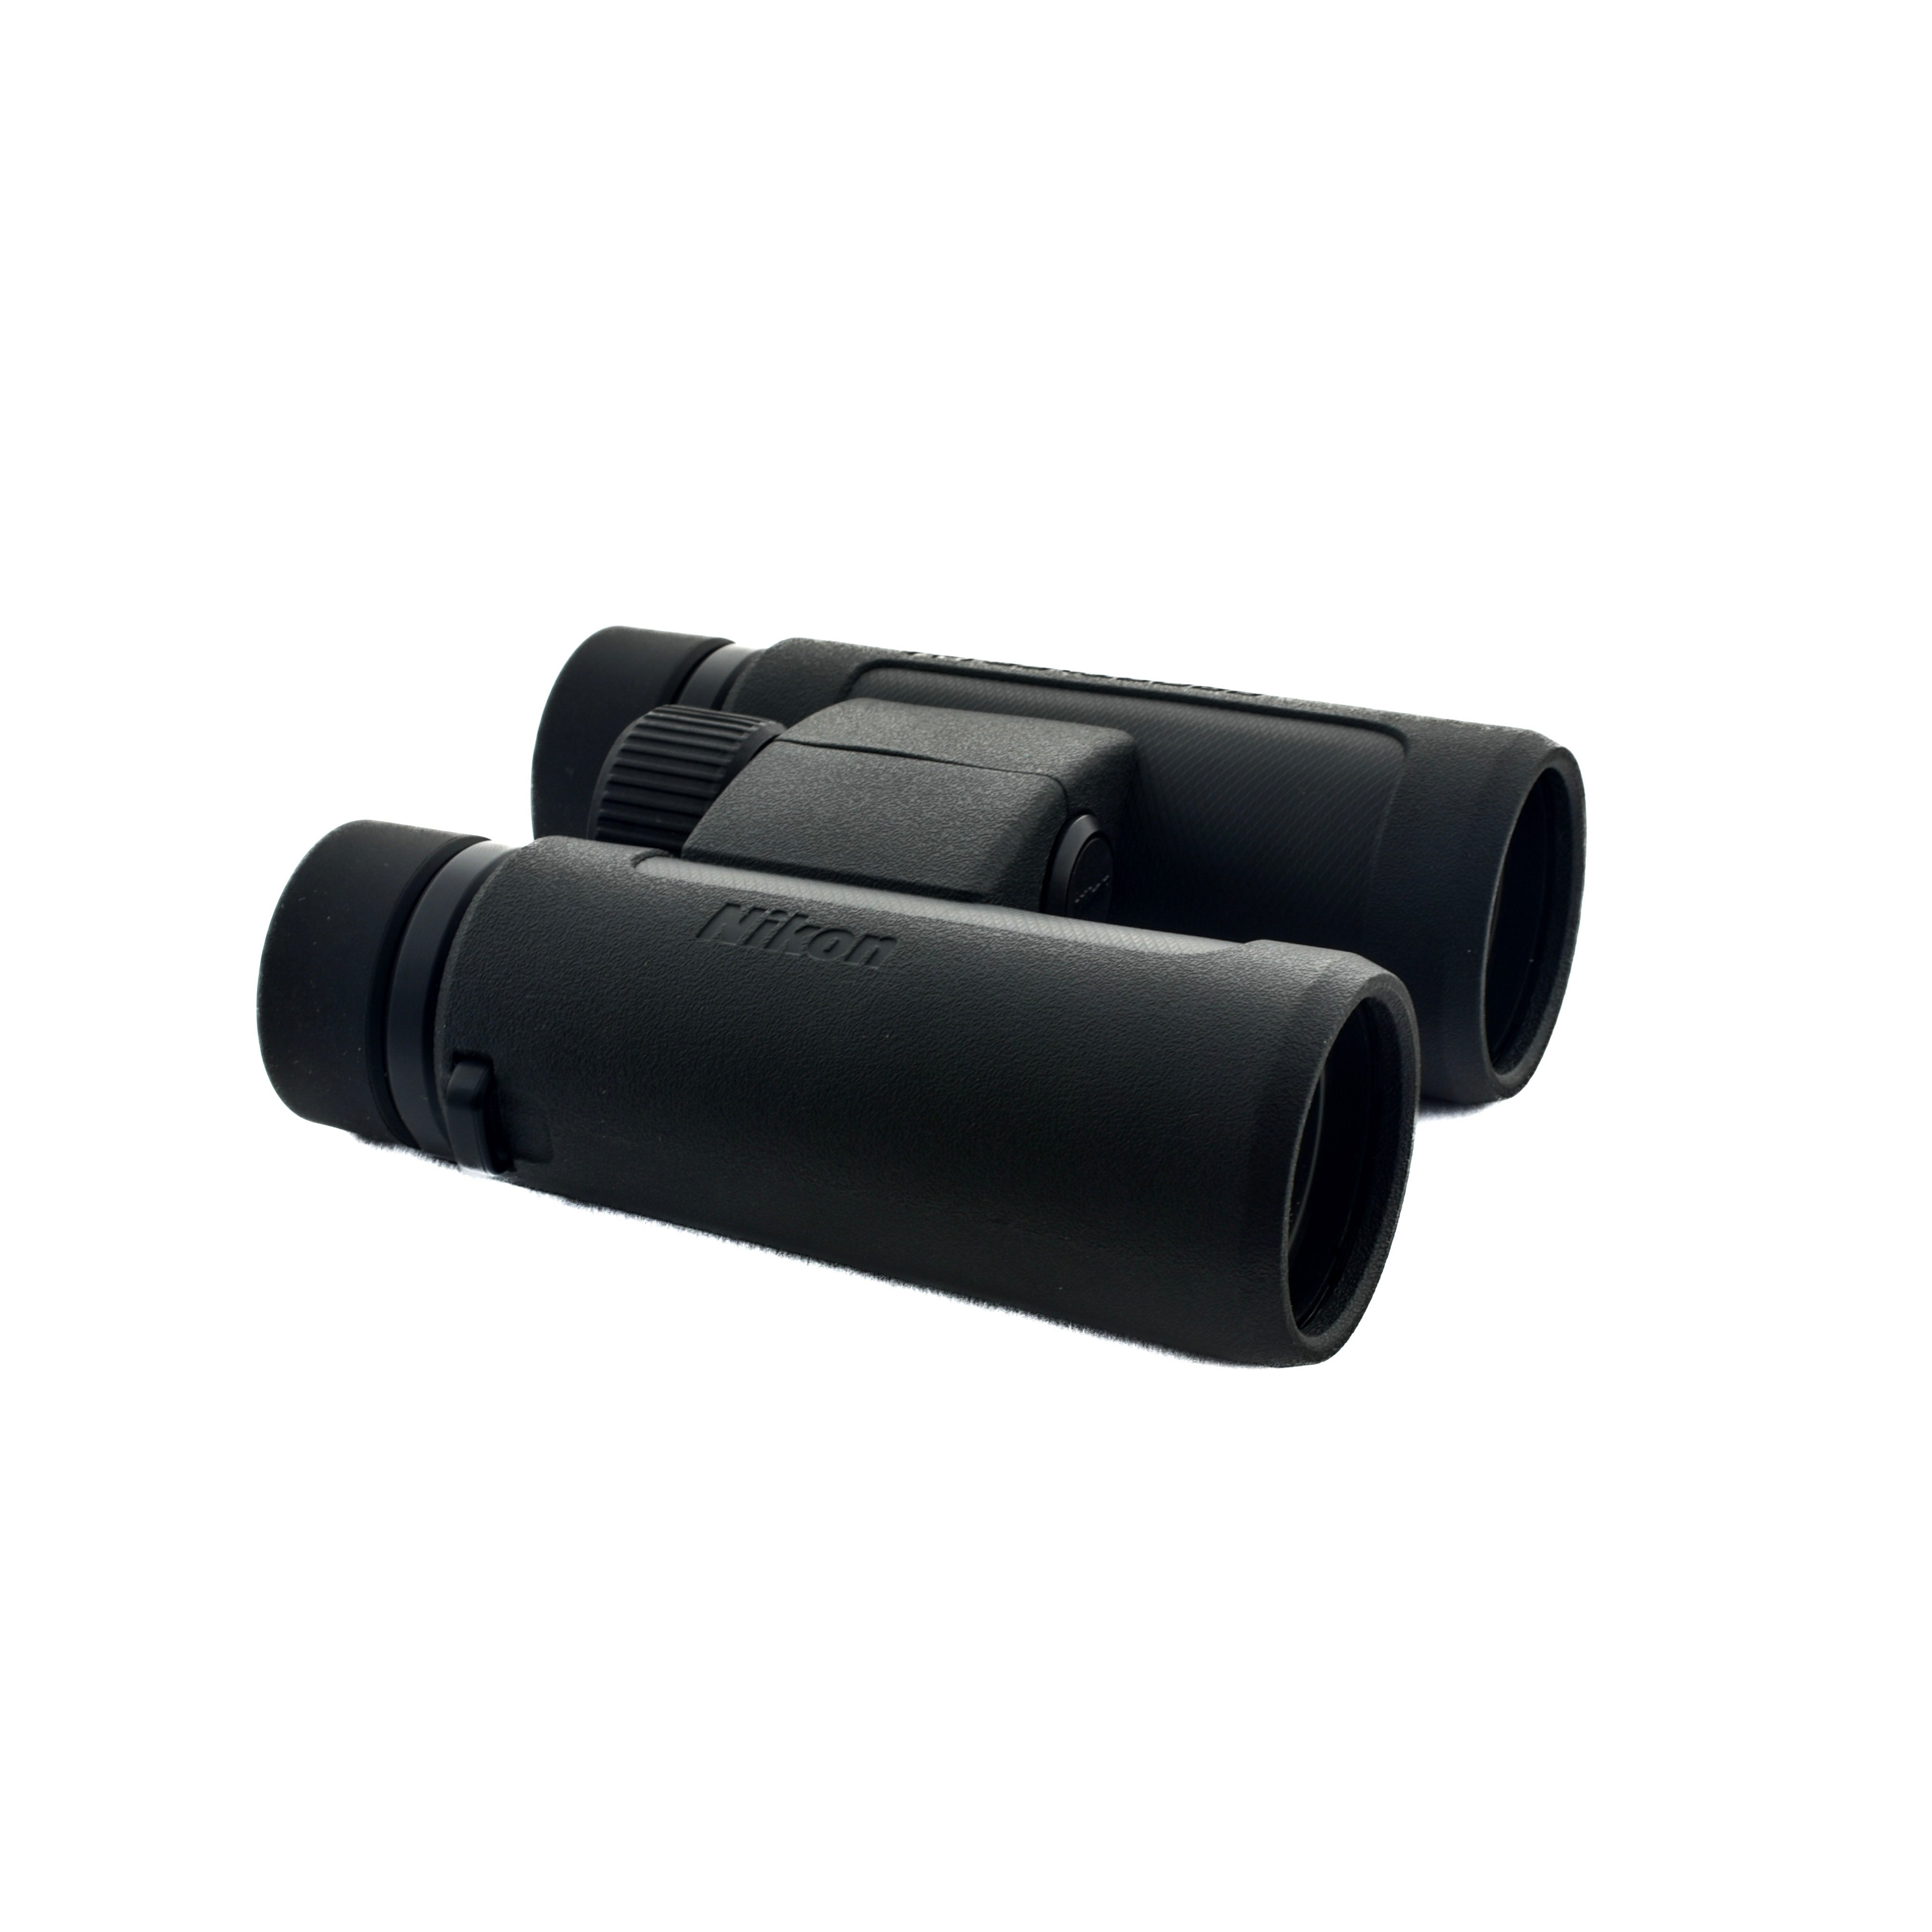 Nikon Prostaff P3 10x30 WP Binoculars (Black)